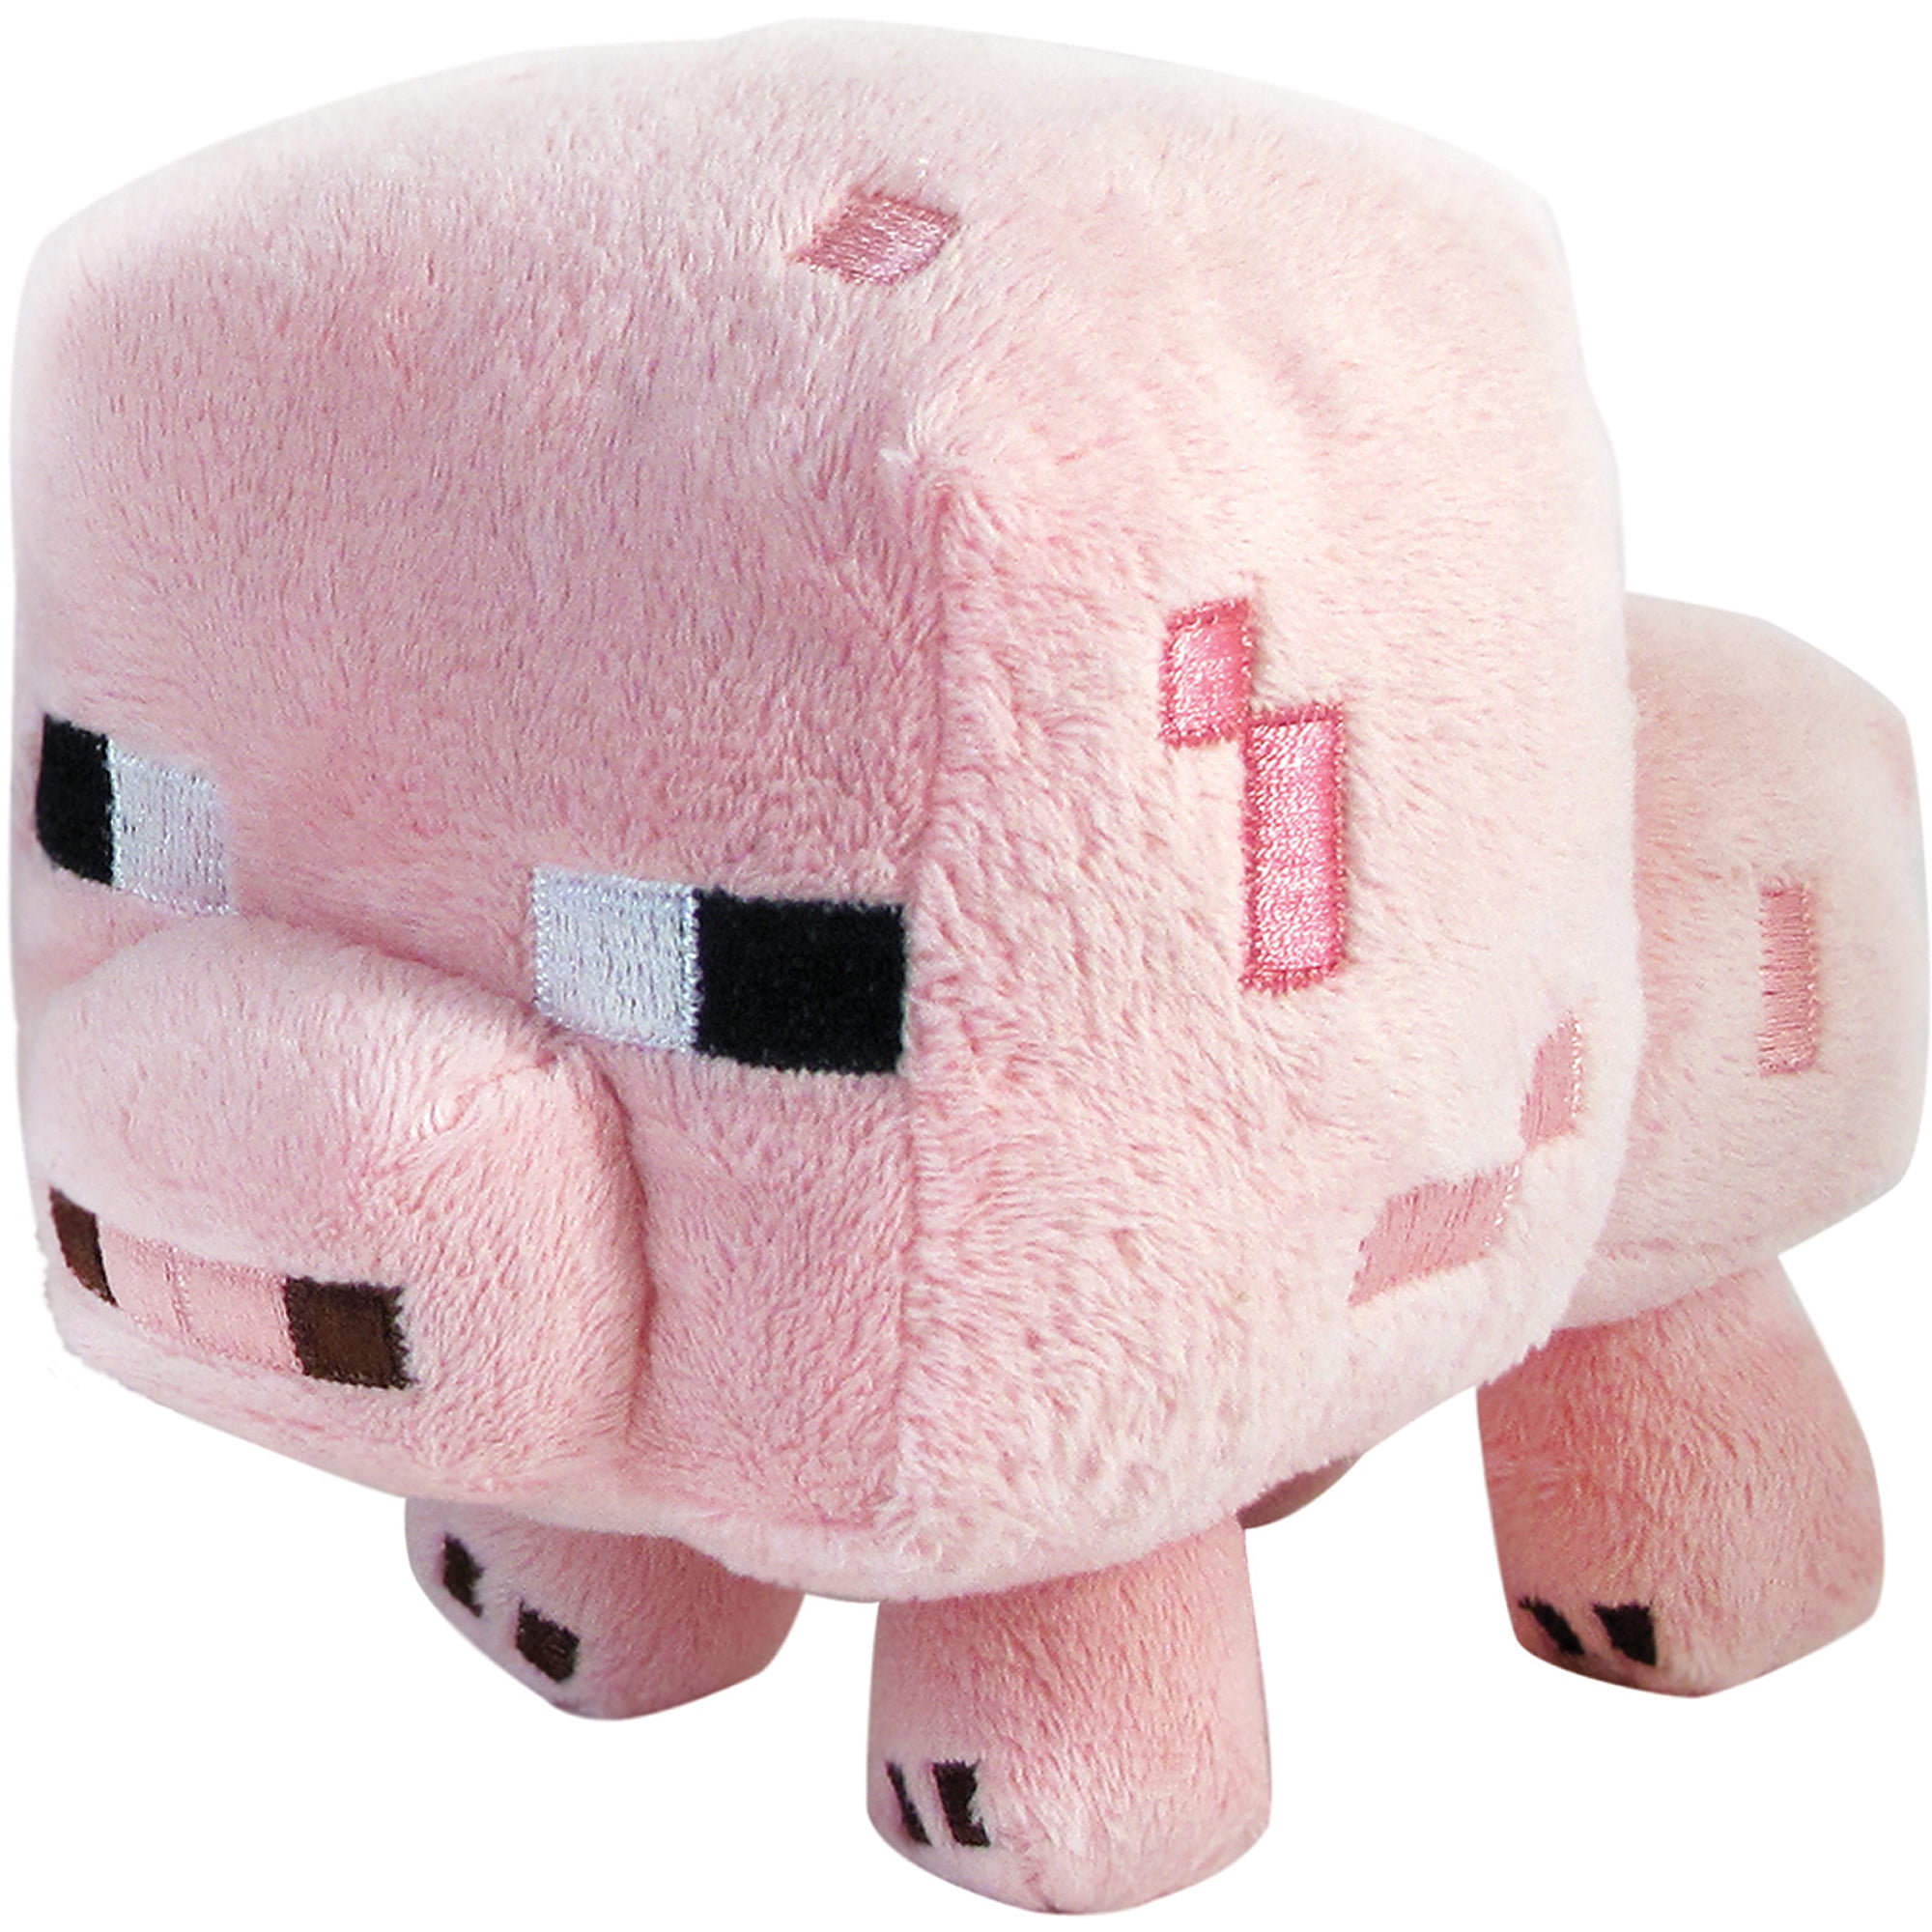 minecraft pig plush toy